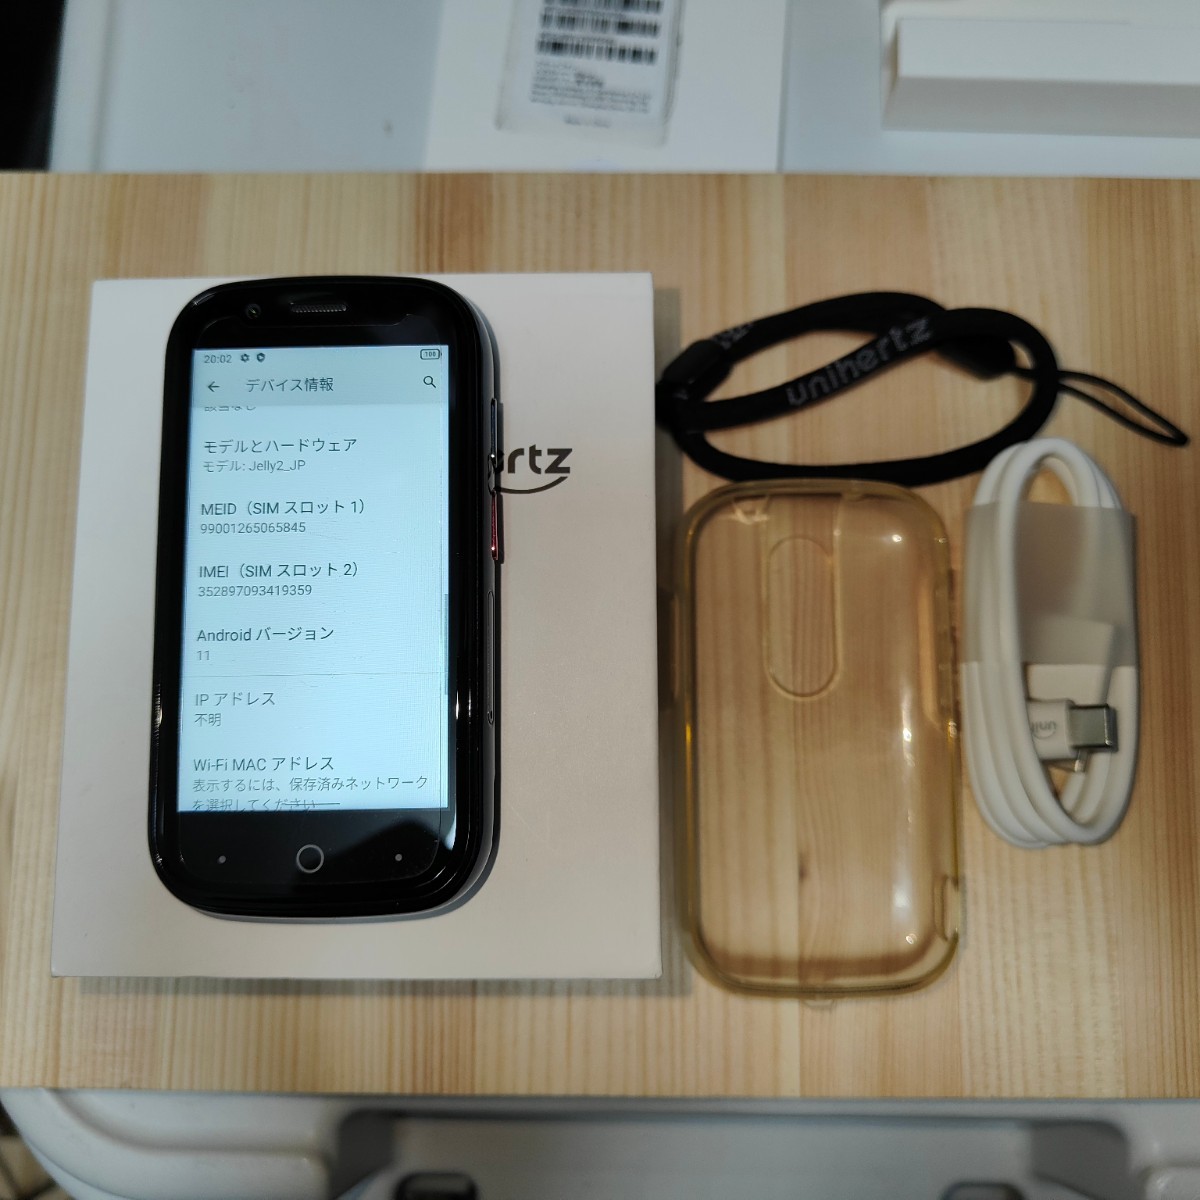 Unihertz - Jelly 2 世界最小Felica機能搭載スマートフォン Android 11搭載 おサイフケータイ中古_画像1